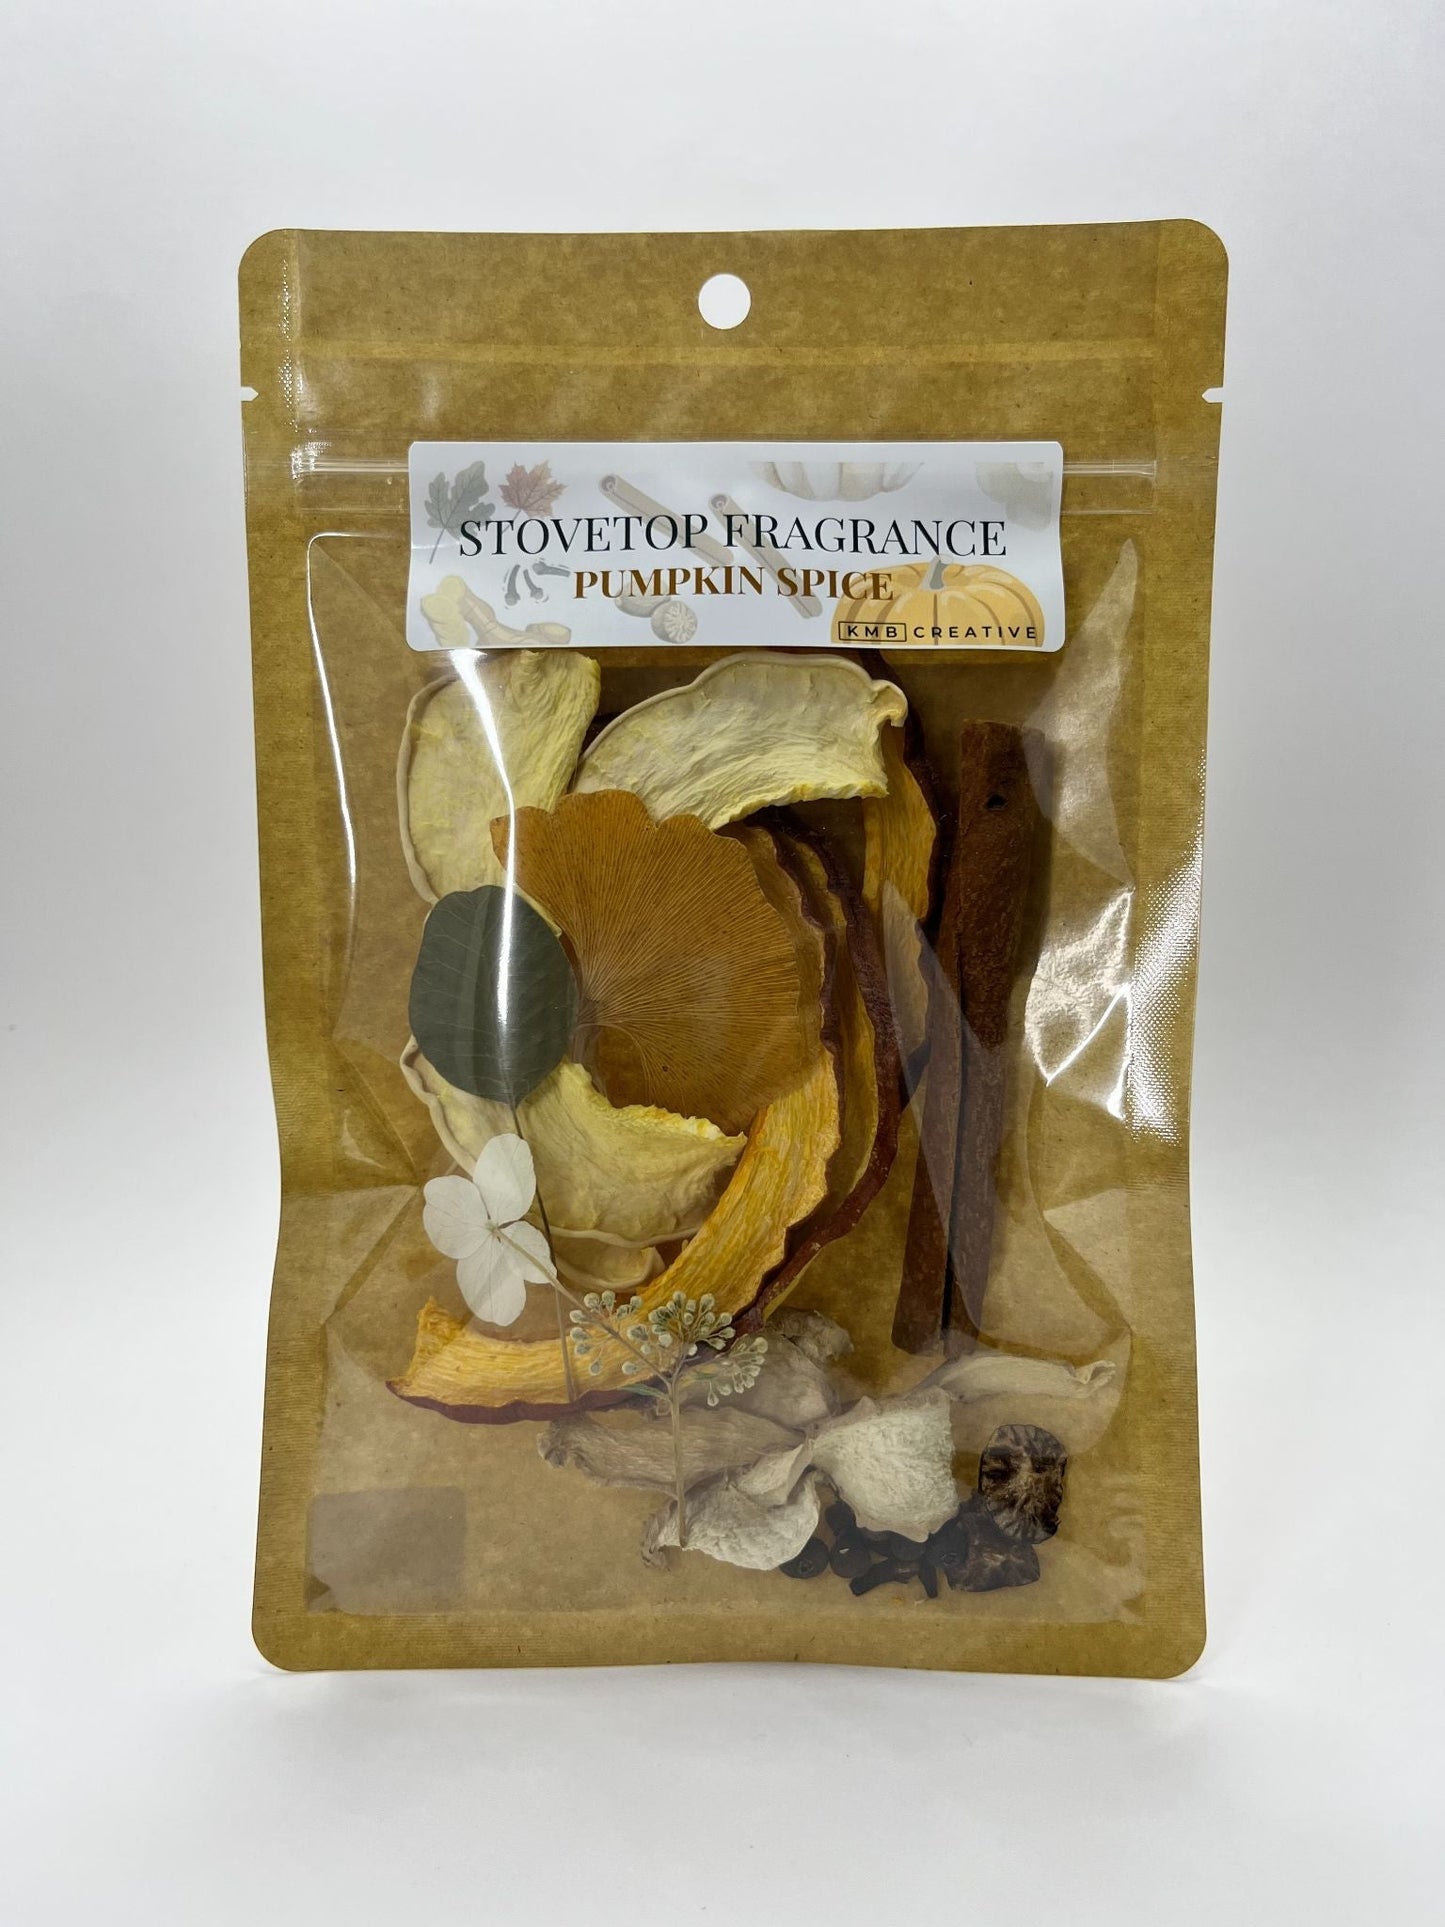 082-008 - Pumpkin Spice Stovetop Fragrance - 1